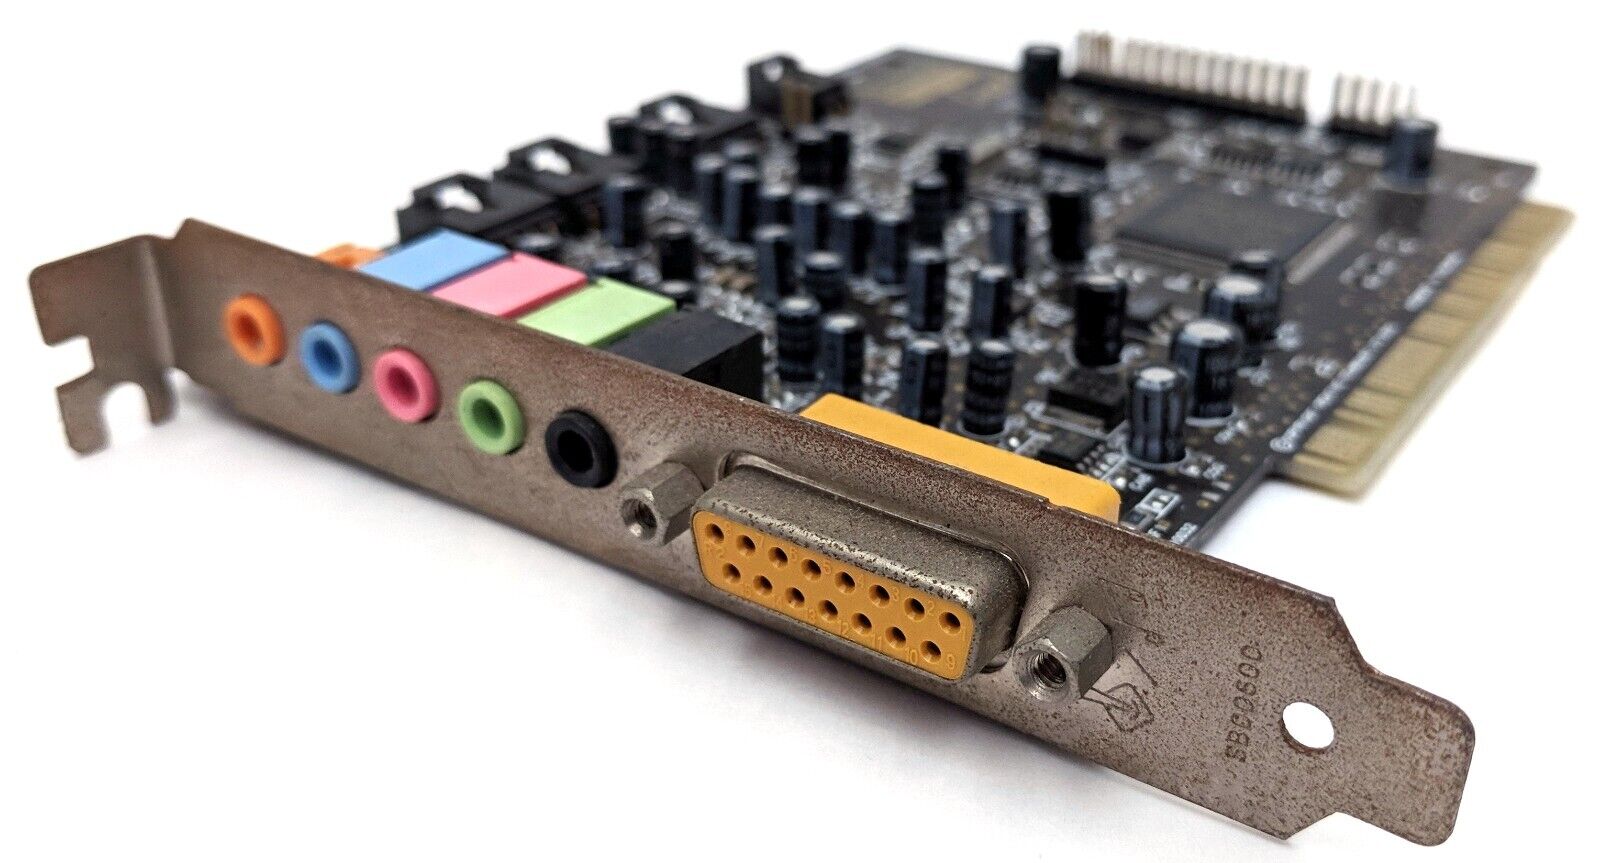 VTG 2003 Creative Labs SB0060 Sound Blaster Live 5.1 PCI Sound Card Midi Port